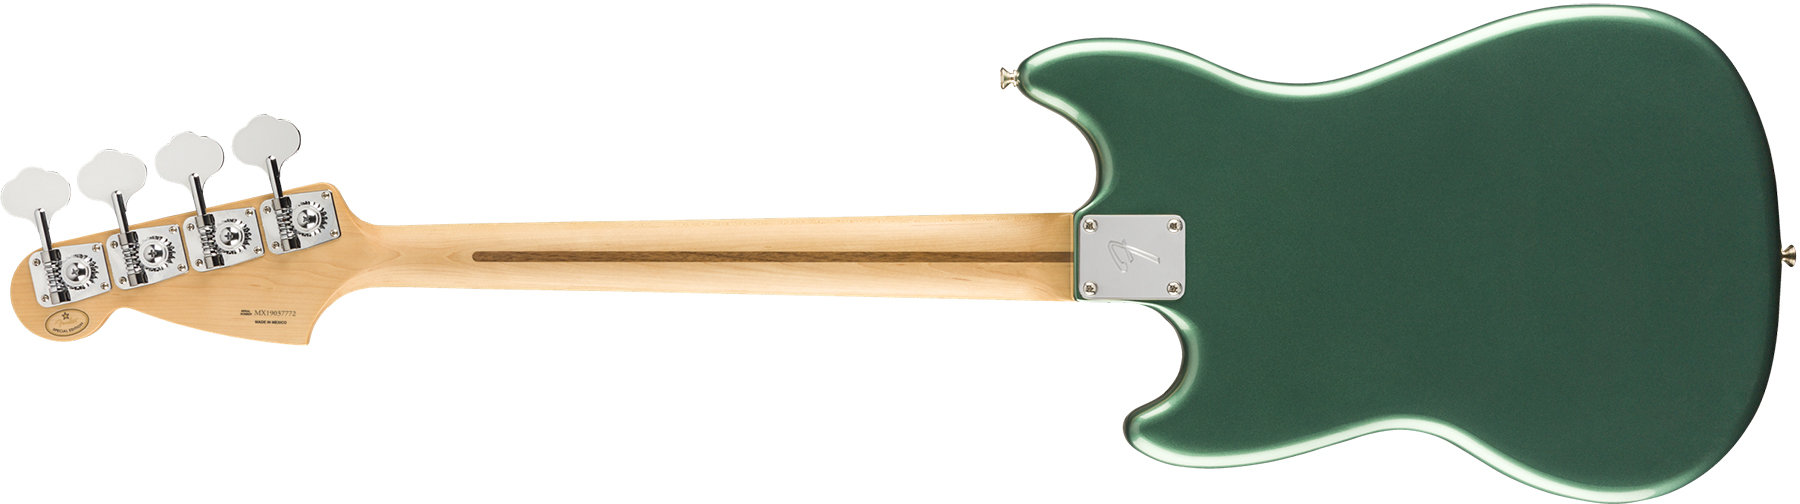 Fender Mustang Bass Pj Player Ltd Mex Pf - Sherwood Green Metallic - Basse Électrique Enfants - Variation 1